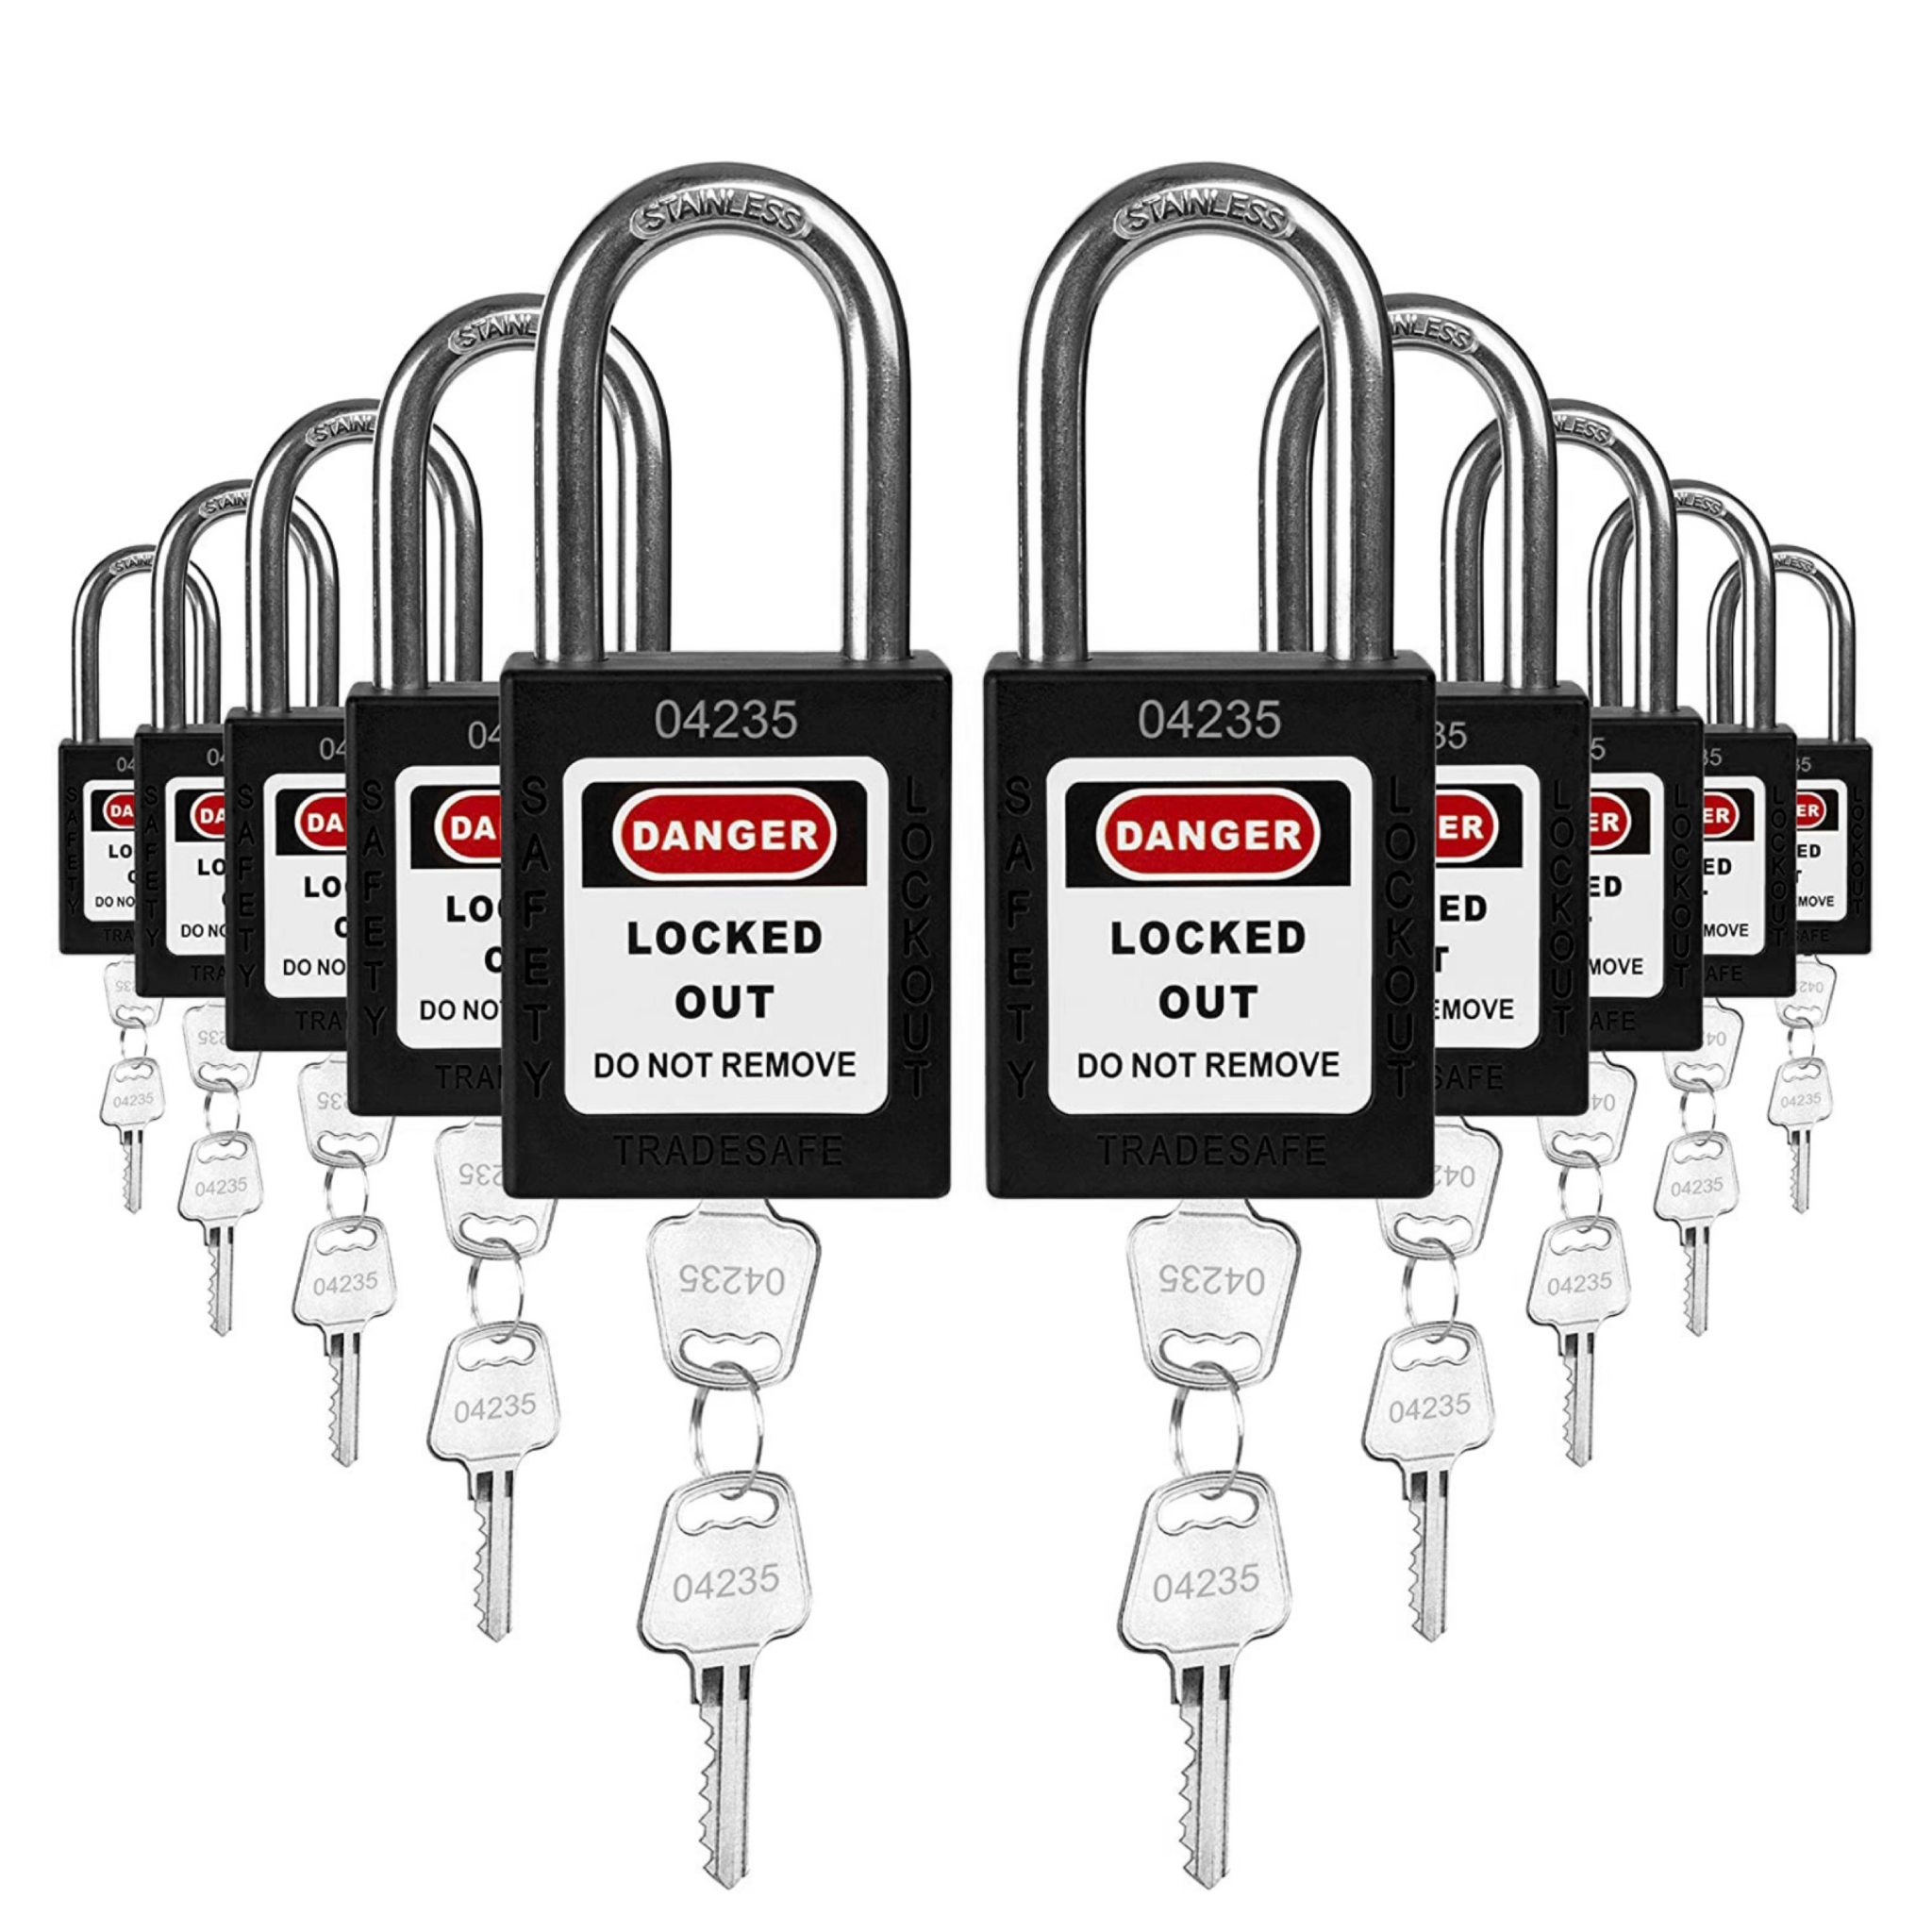 TRADESAFE Lockout Tagout Steel Cable Locks with Keys - 10 Red Keyed Alike Unlimited Grouping Electrical Lockout Padlock Set, 2 Keys per Lock, Premium